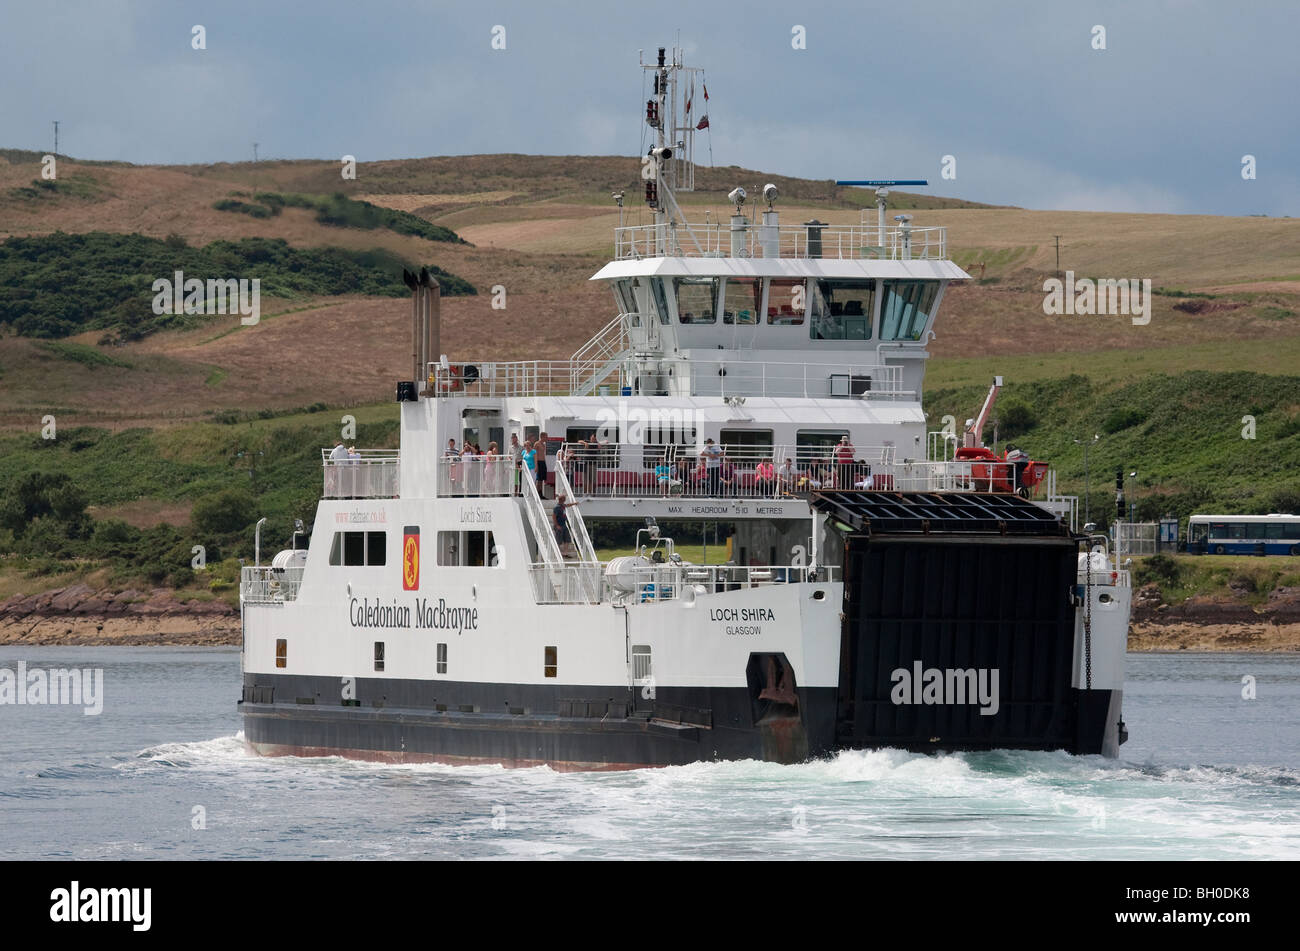 The CALMAC ferry Loch Shira. Stock Photo